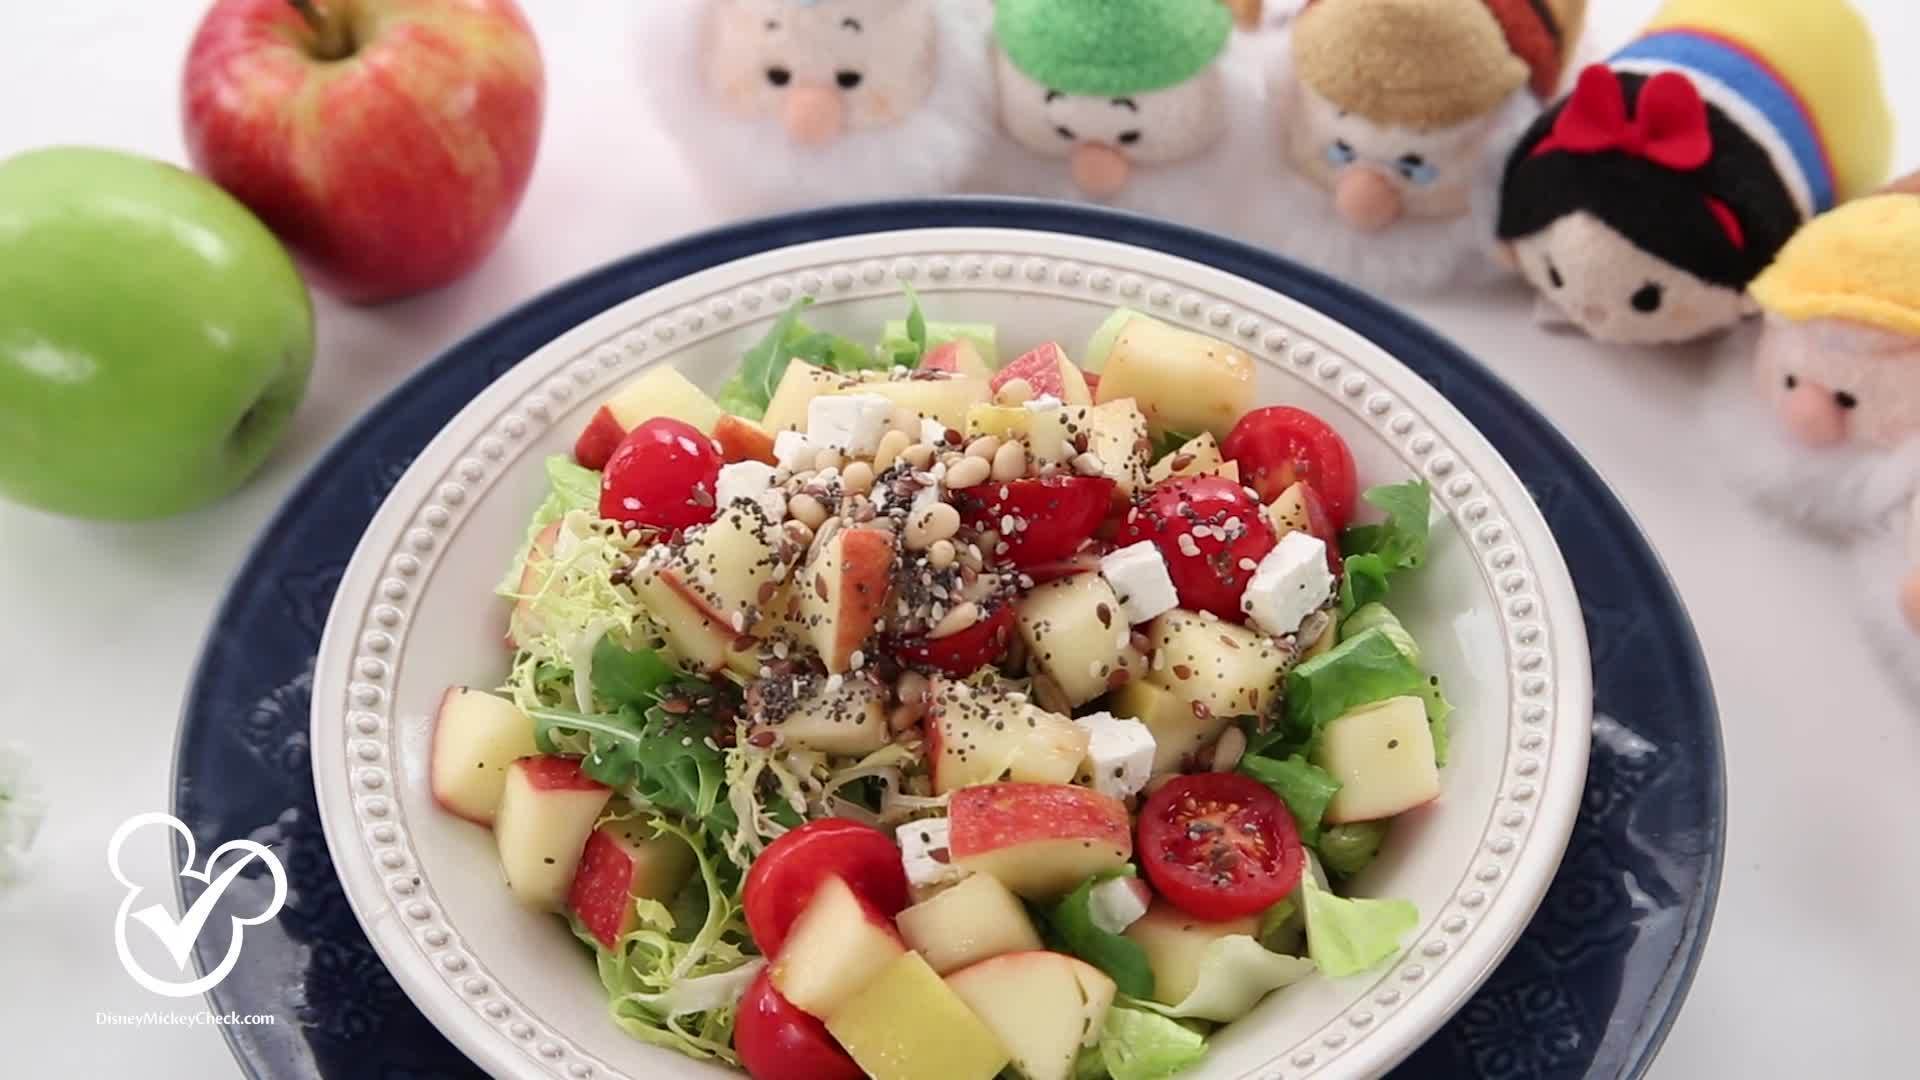 Live Healthier: Snow White’s Enchanted Apple Salad